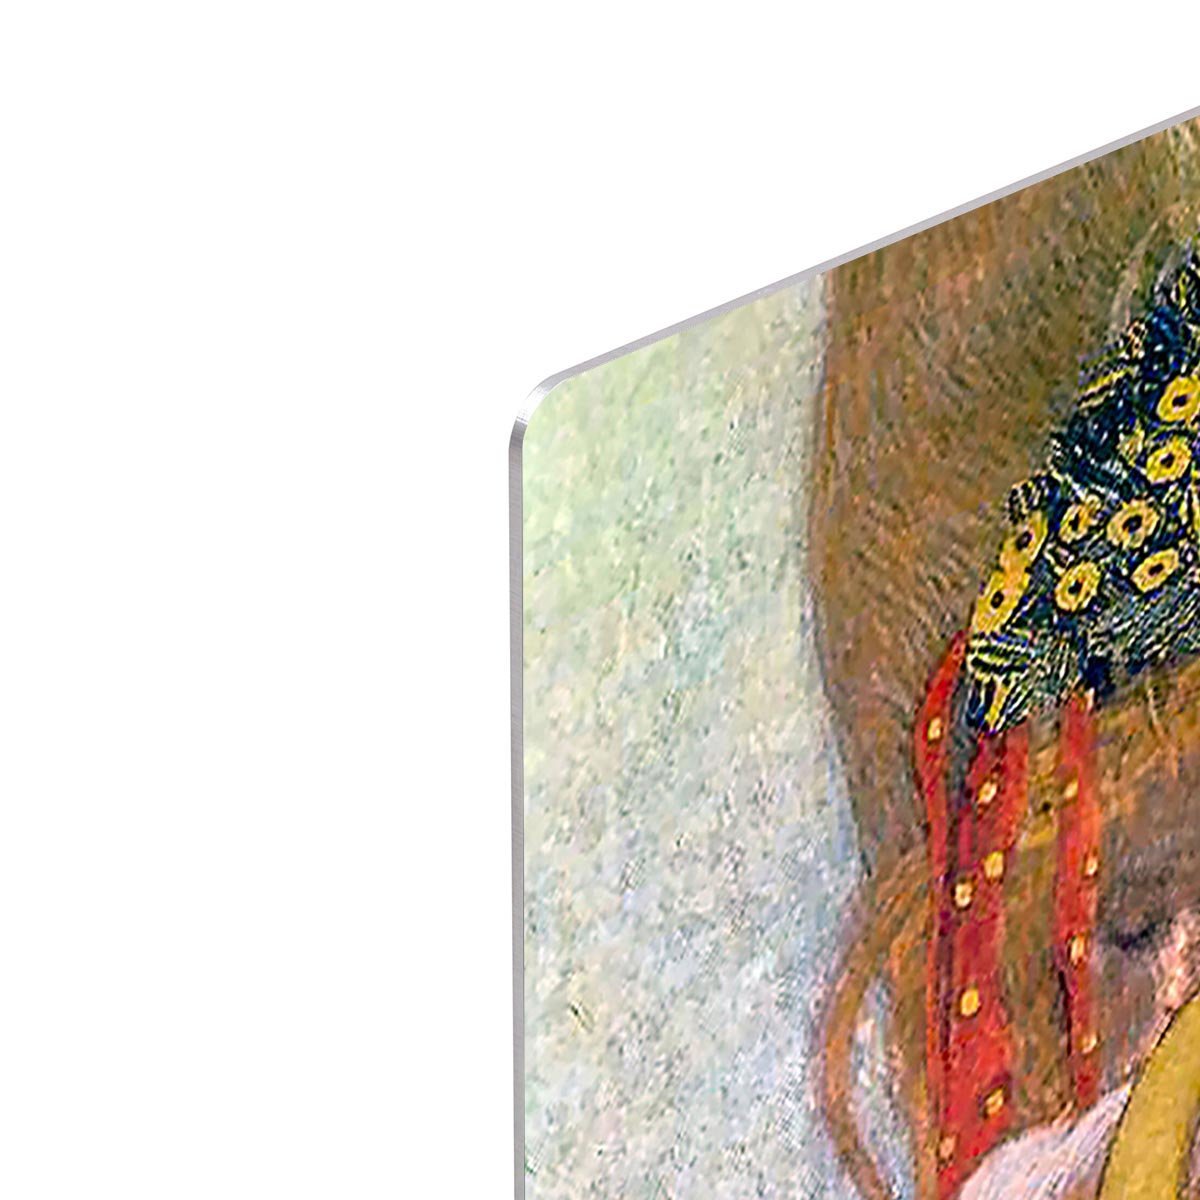 Hygeia by Klimt HD Metal Print